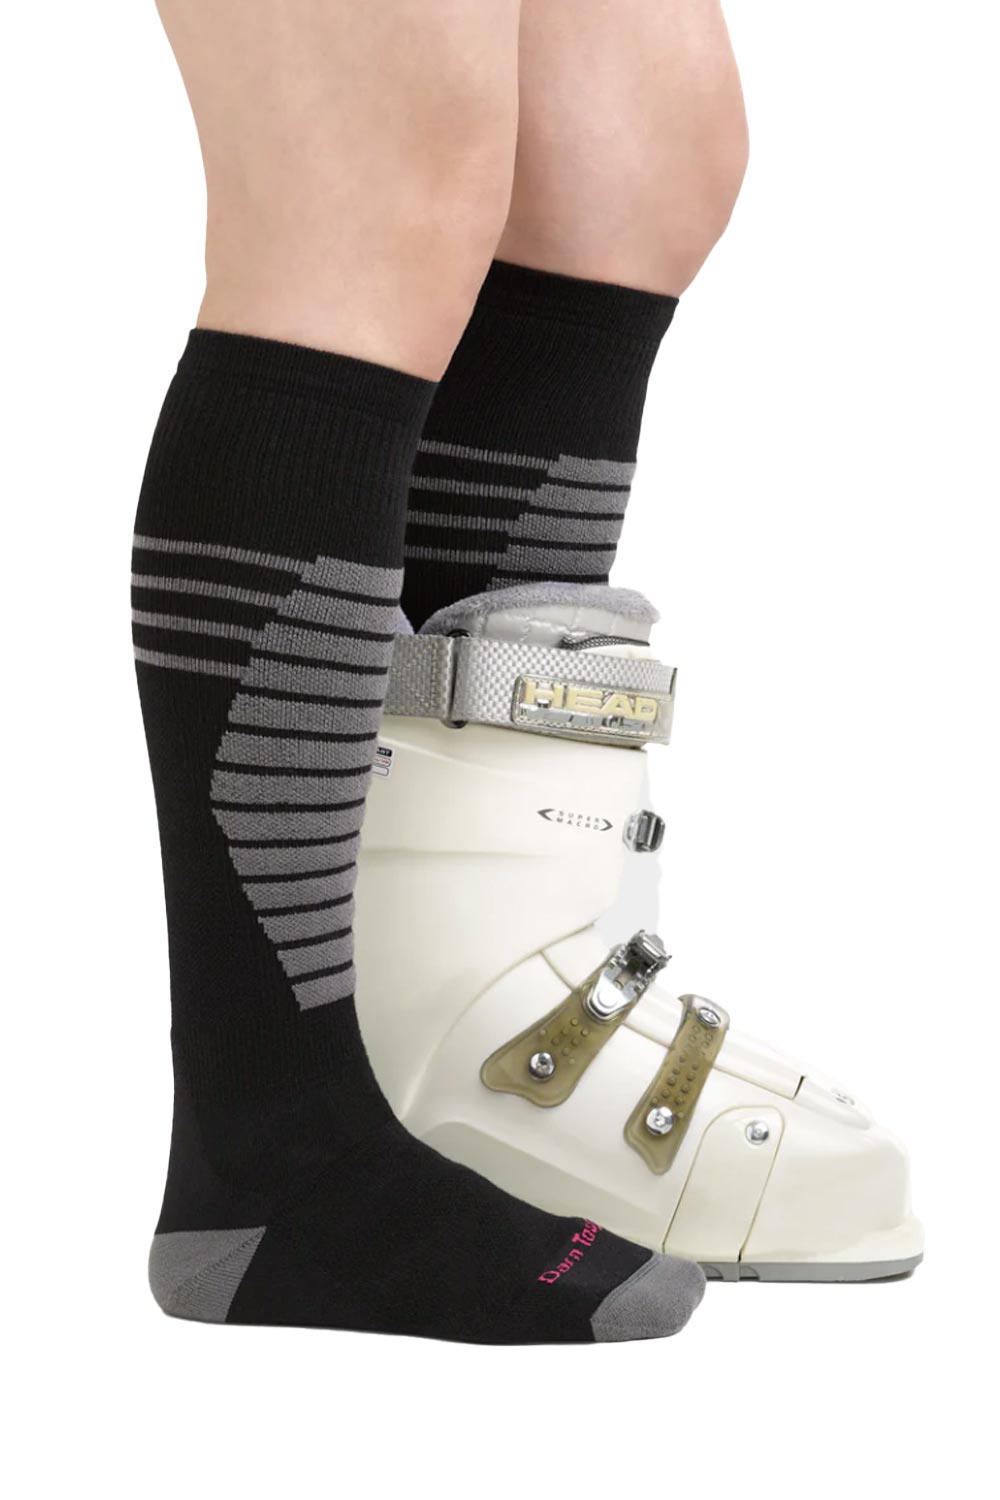 women's Darn Tough Edge ski socks, black and gray